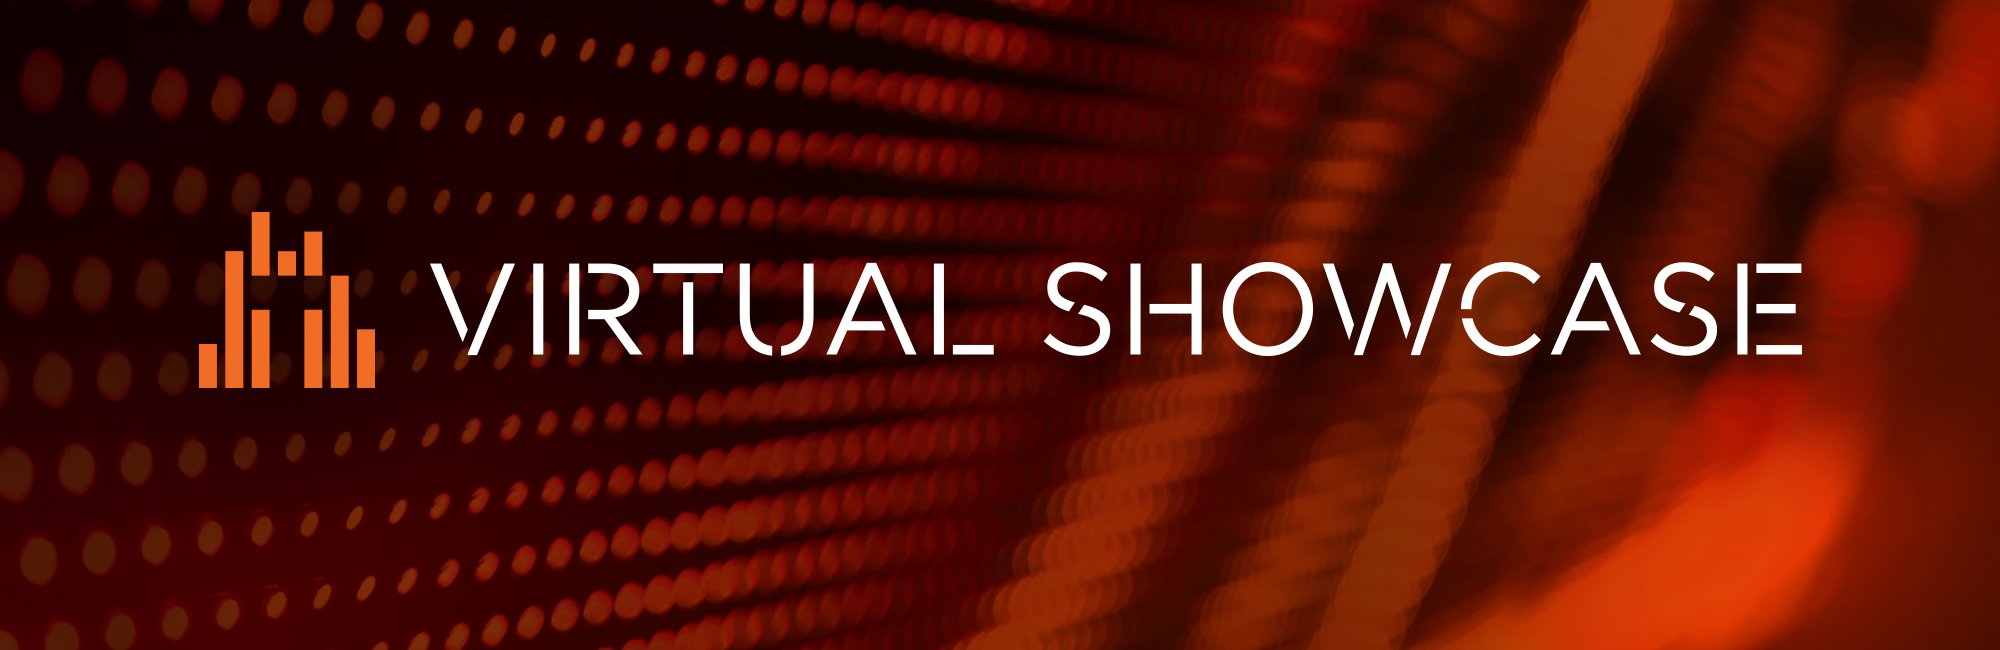 TA-Virtual Showcase_Homepage_Carousel_v1